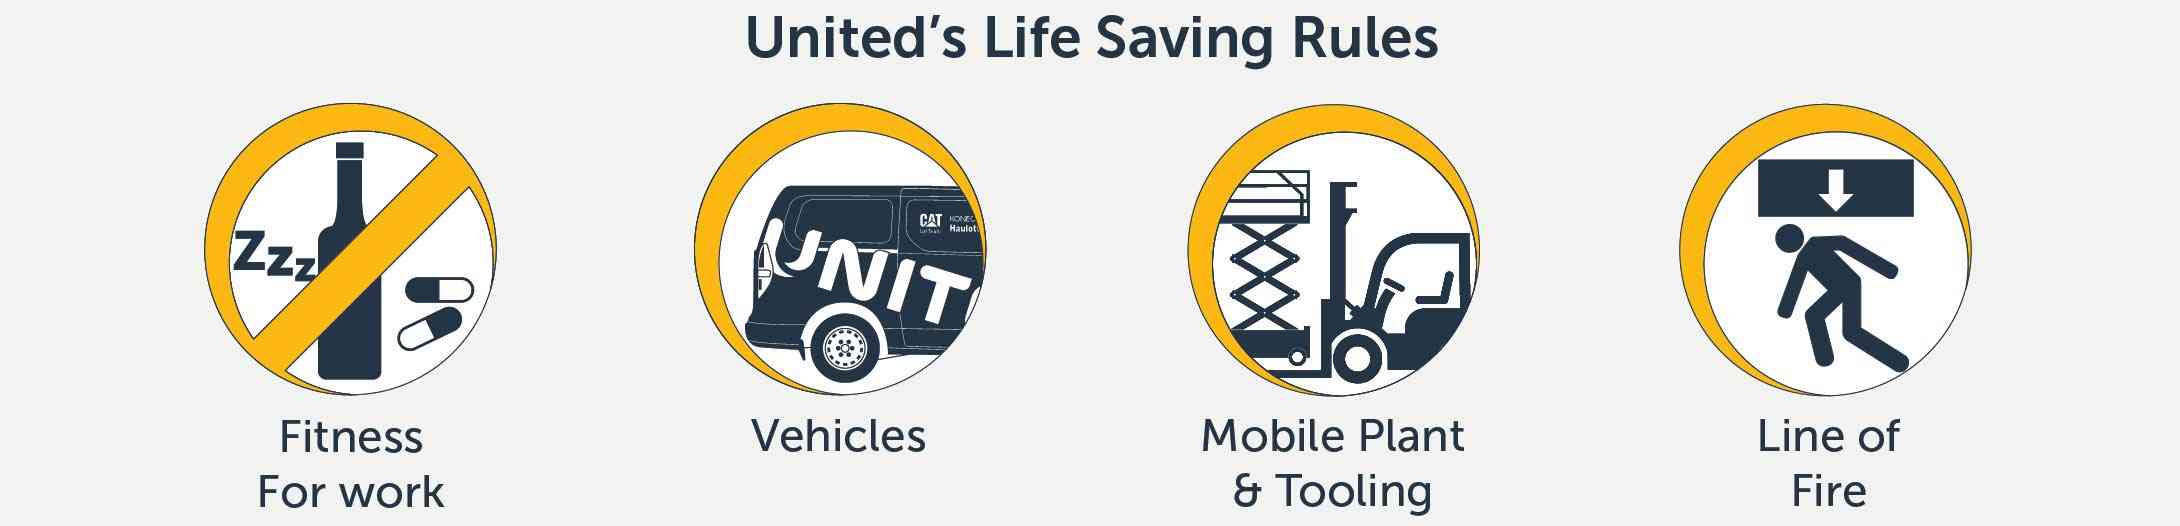 United Life Saving Rules